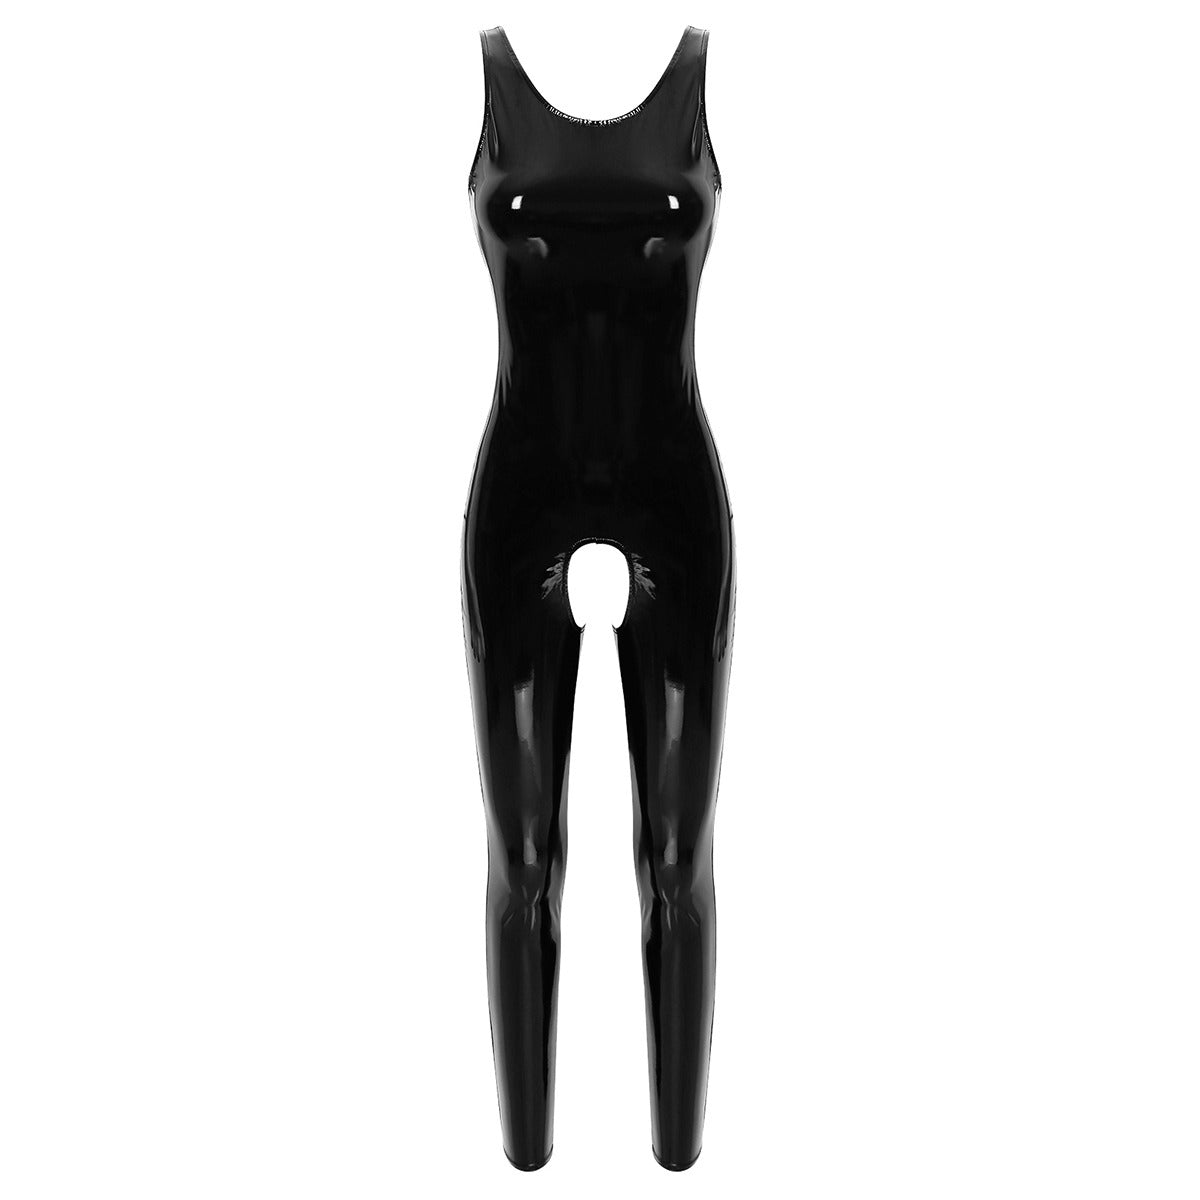 Full-Body Women's Black Jumpsuit / Wet Look Crotchless Catsuit / U-neckline Sleeveless Leotard - HARD'N'HEAVY